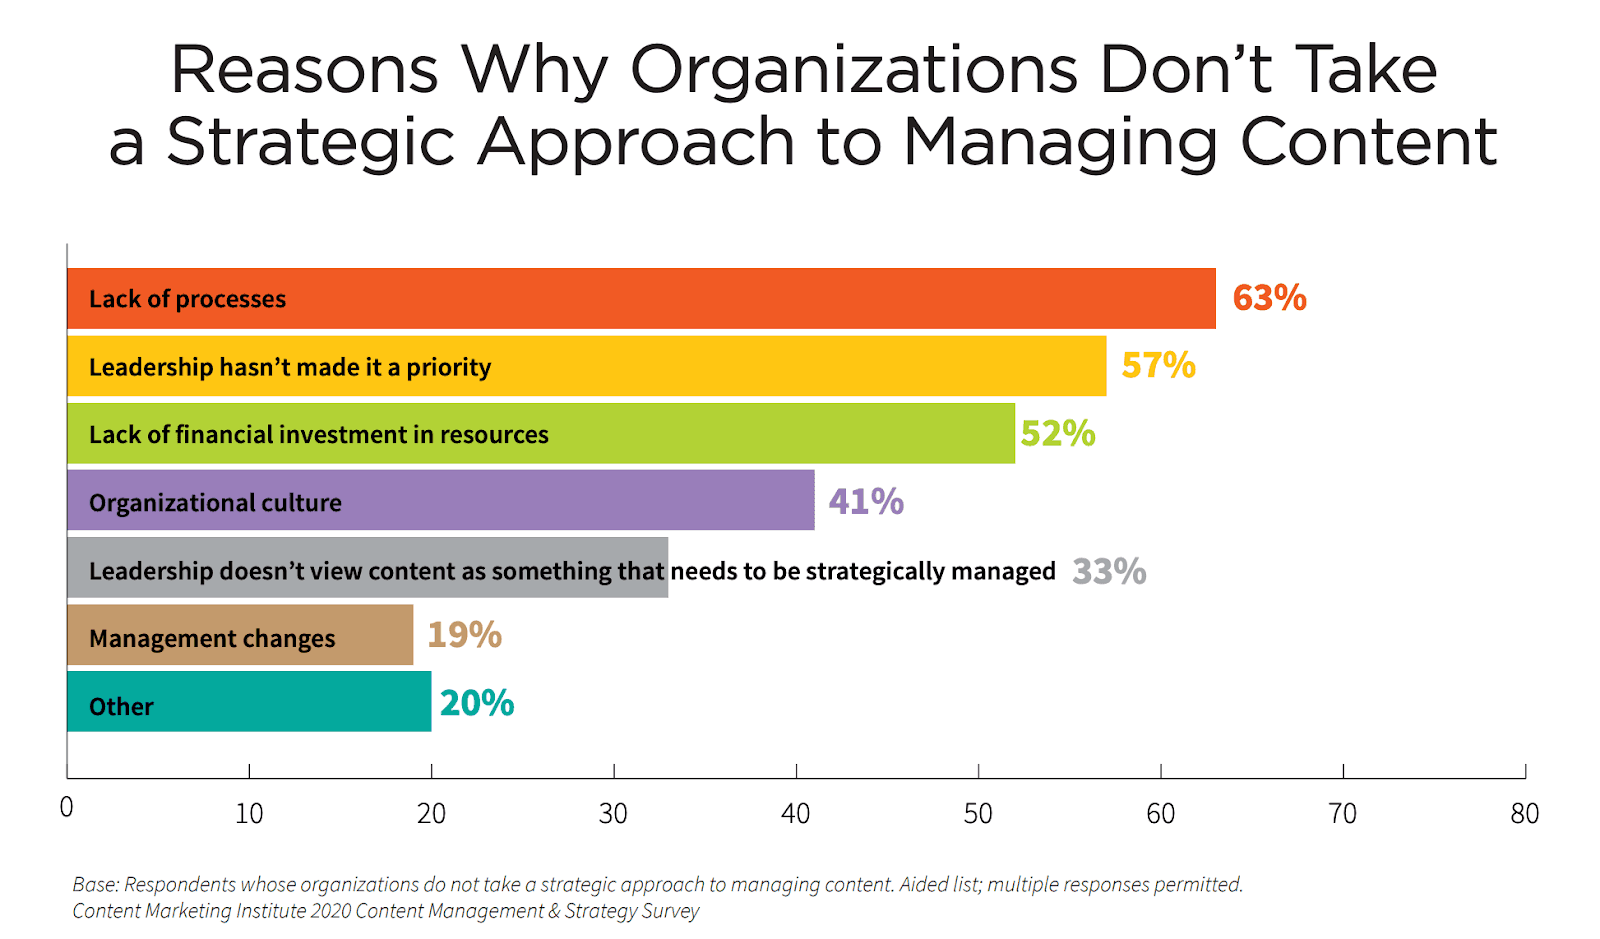 Why organizations don't take a strategic approach